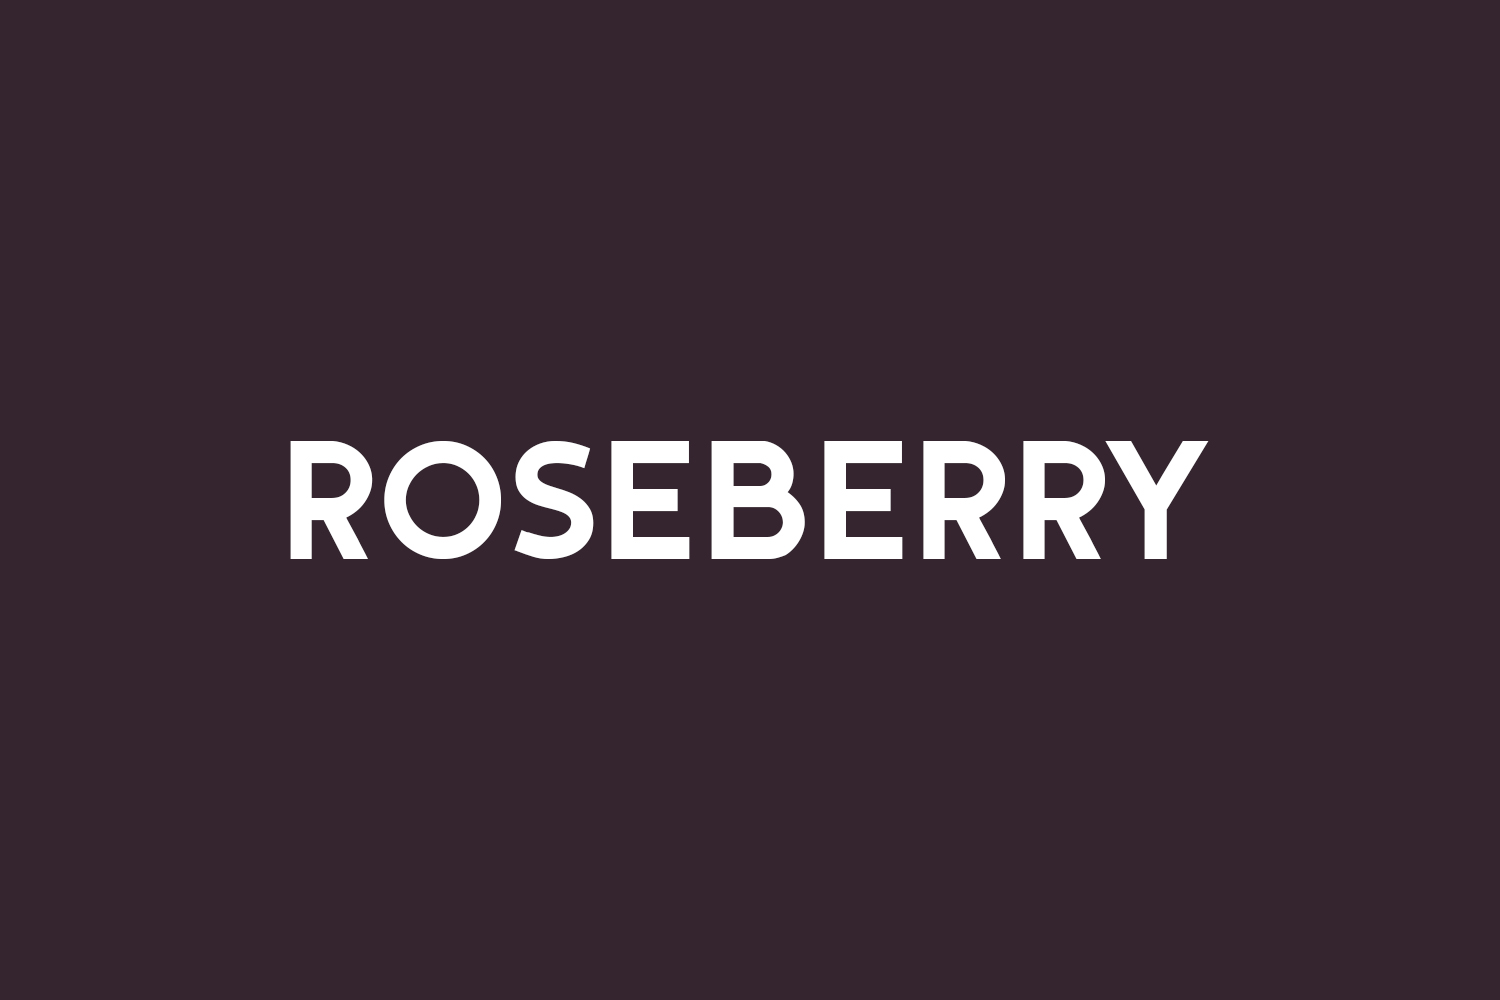 Roseberry Free Font